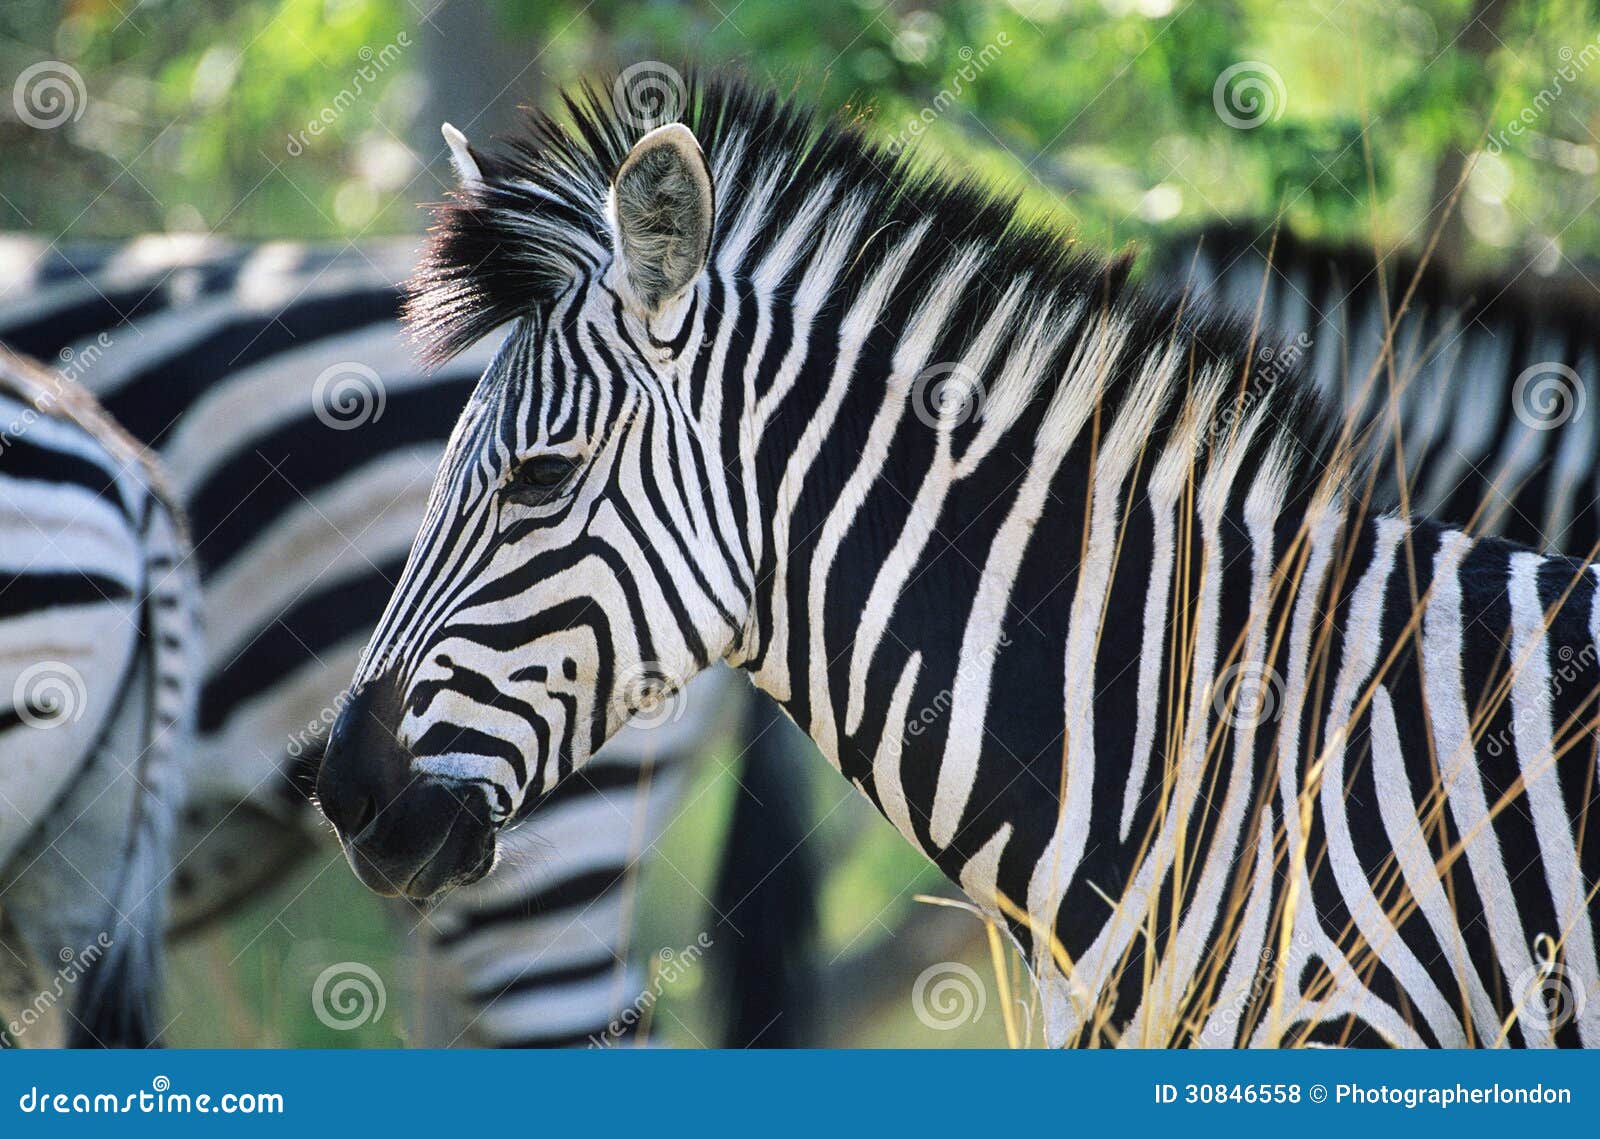 plains zebra (equus burchelli) close-up